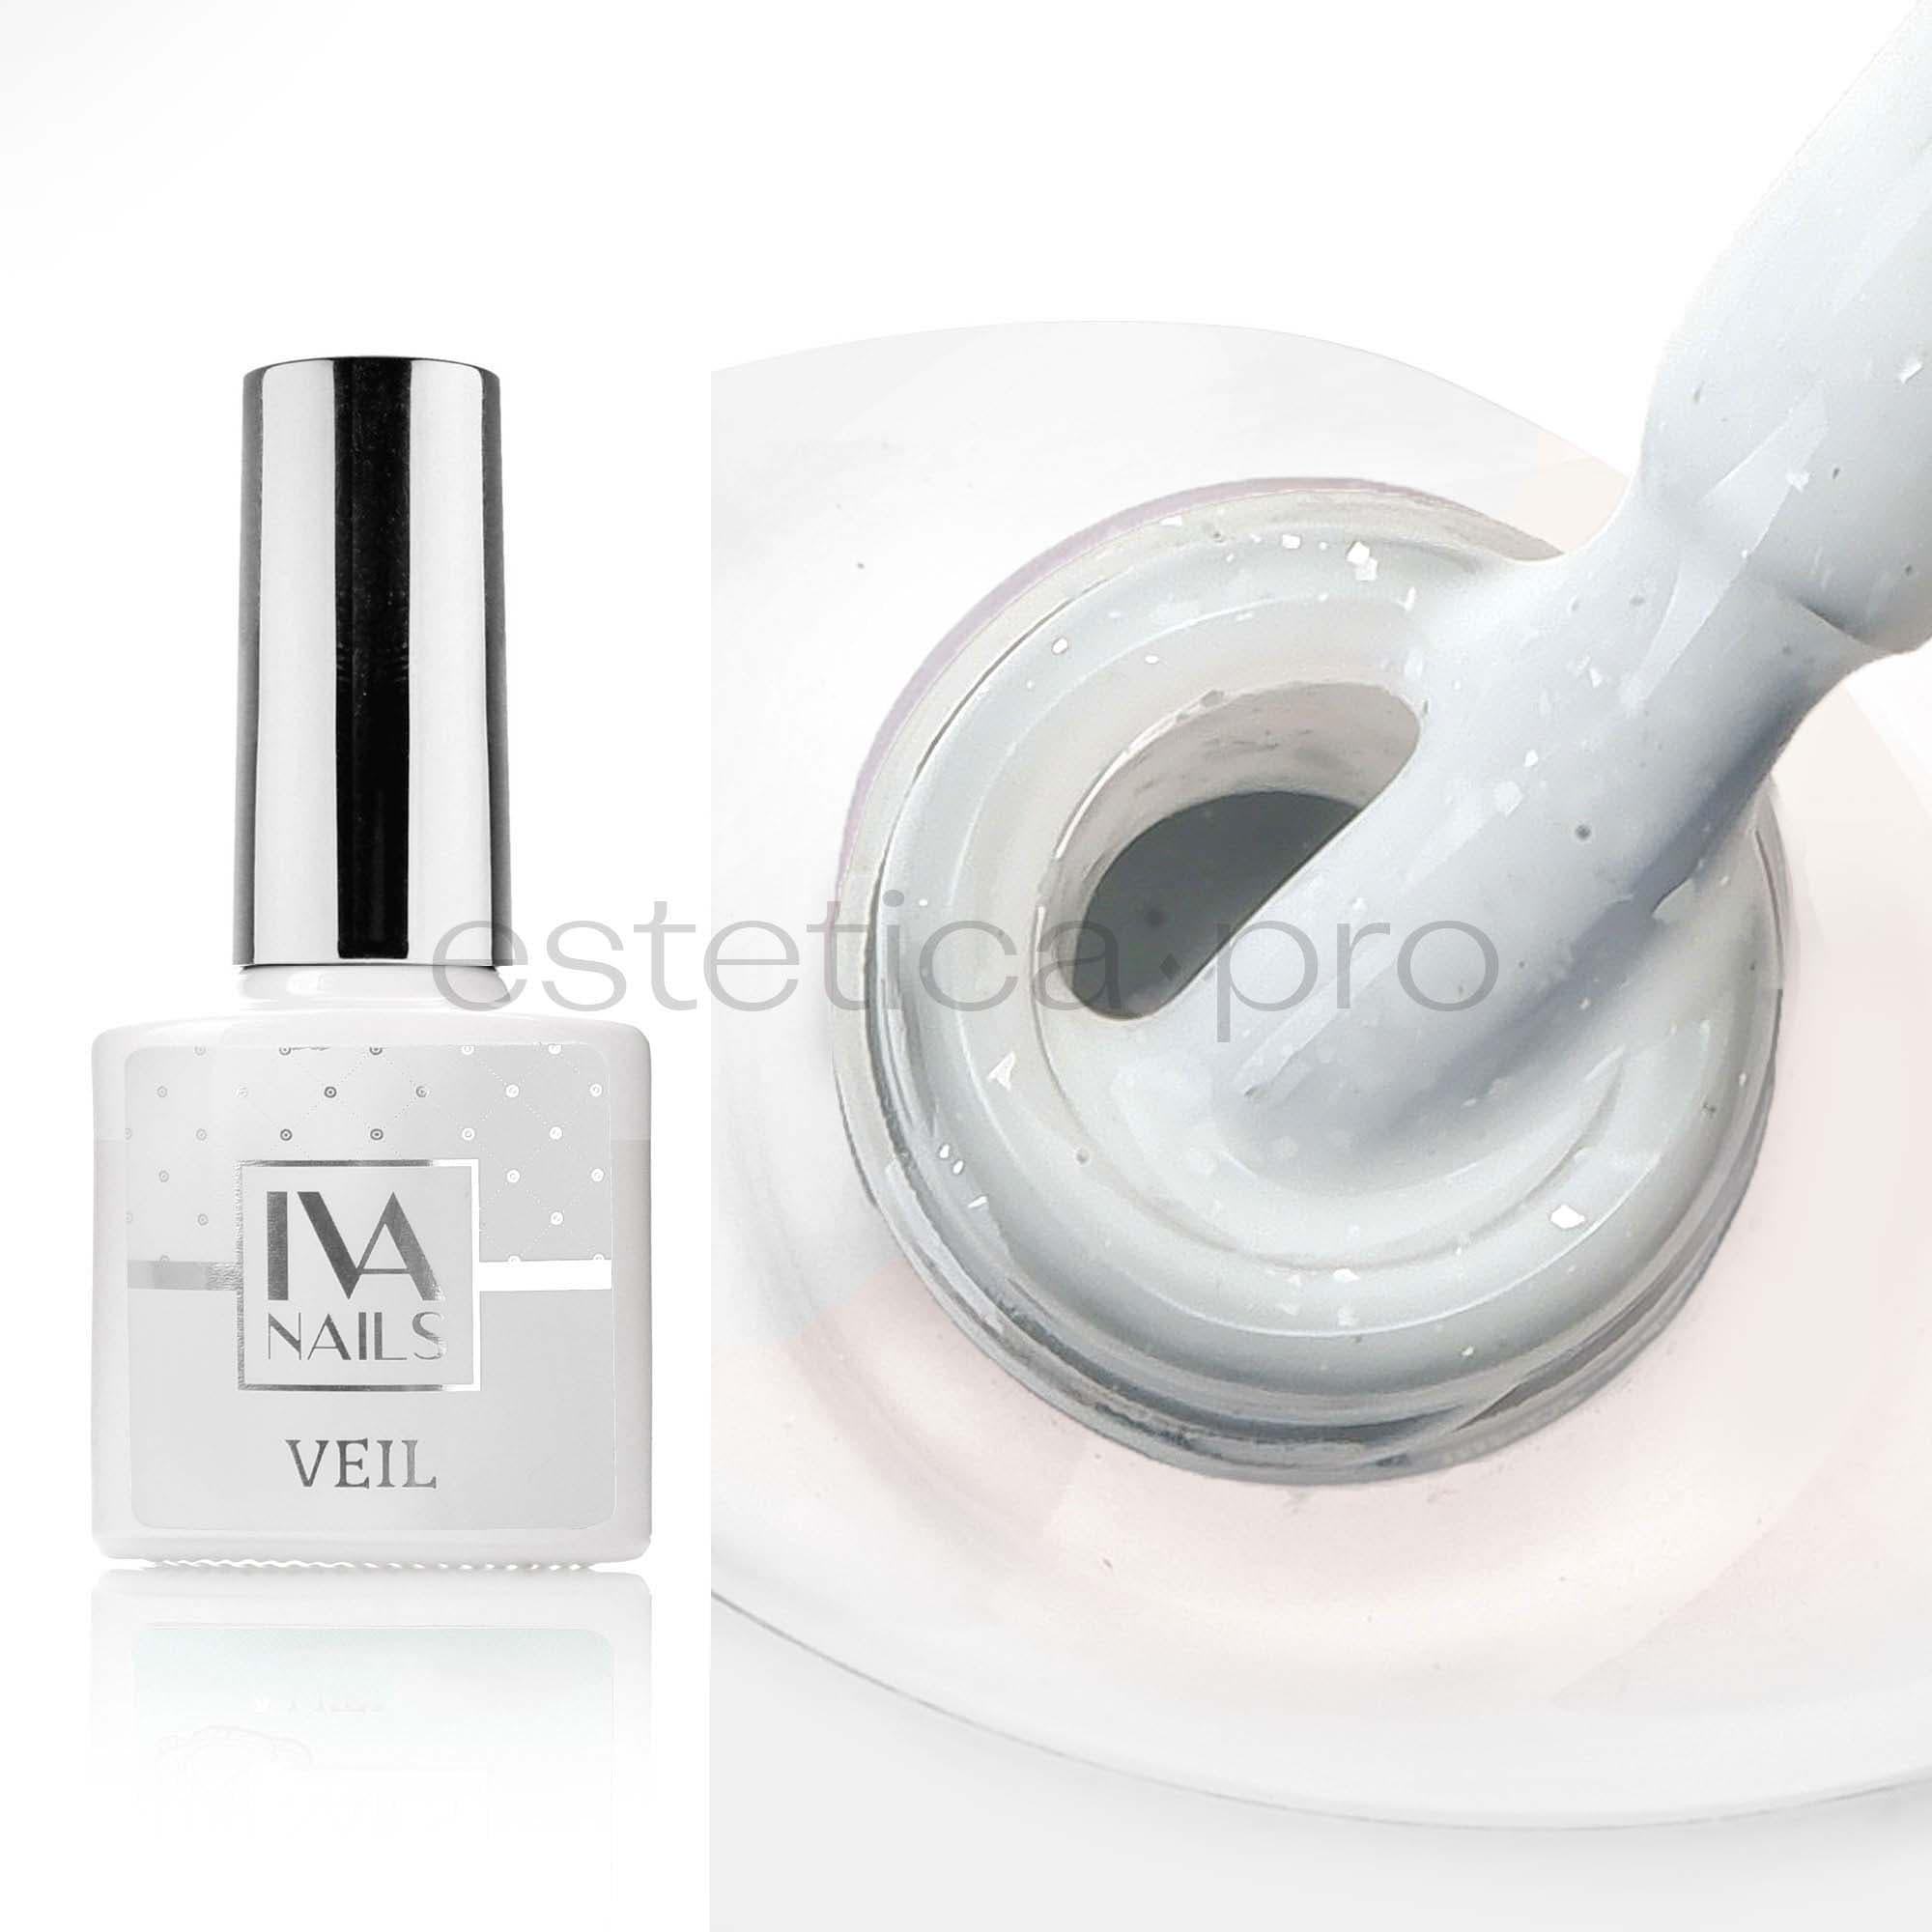 Гель-лак Iva Nails Veil 01, 8 мл.